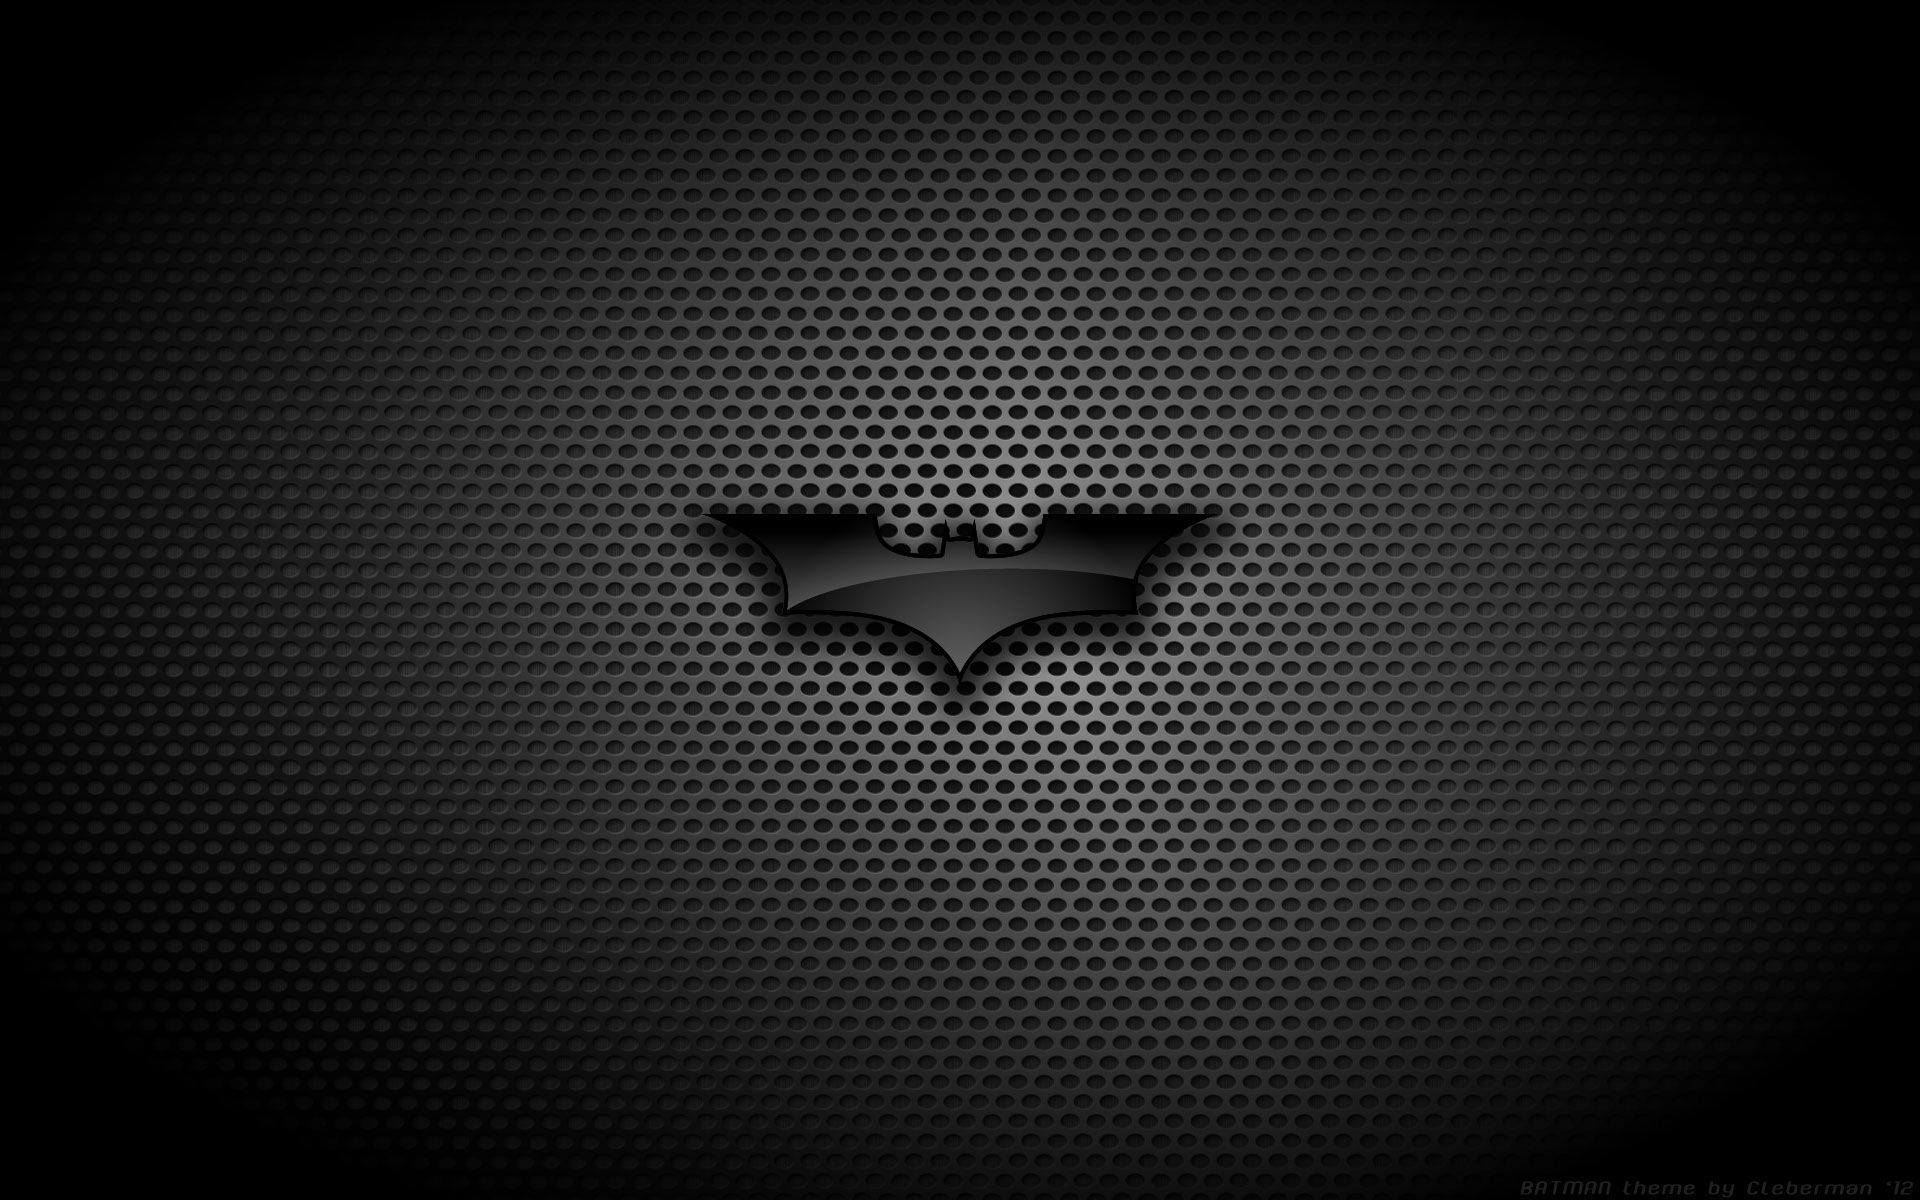 Batman Wallpaper HD 2016 download free | Wallpapers, Backgrounds ...